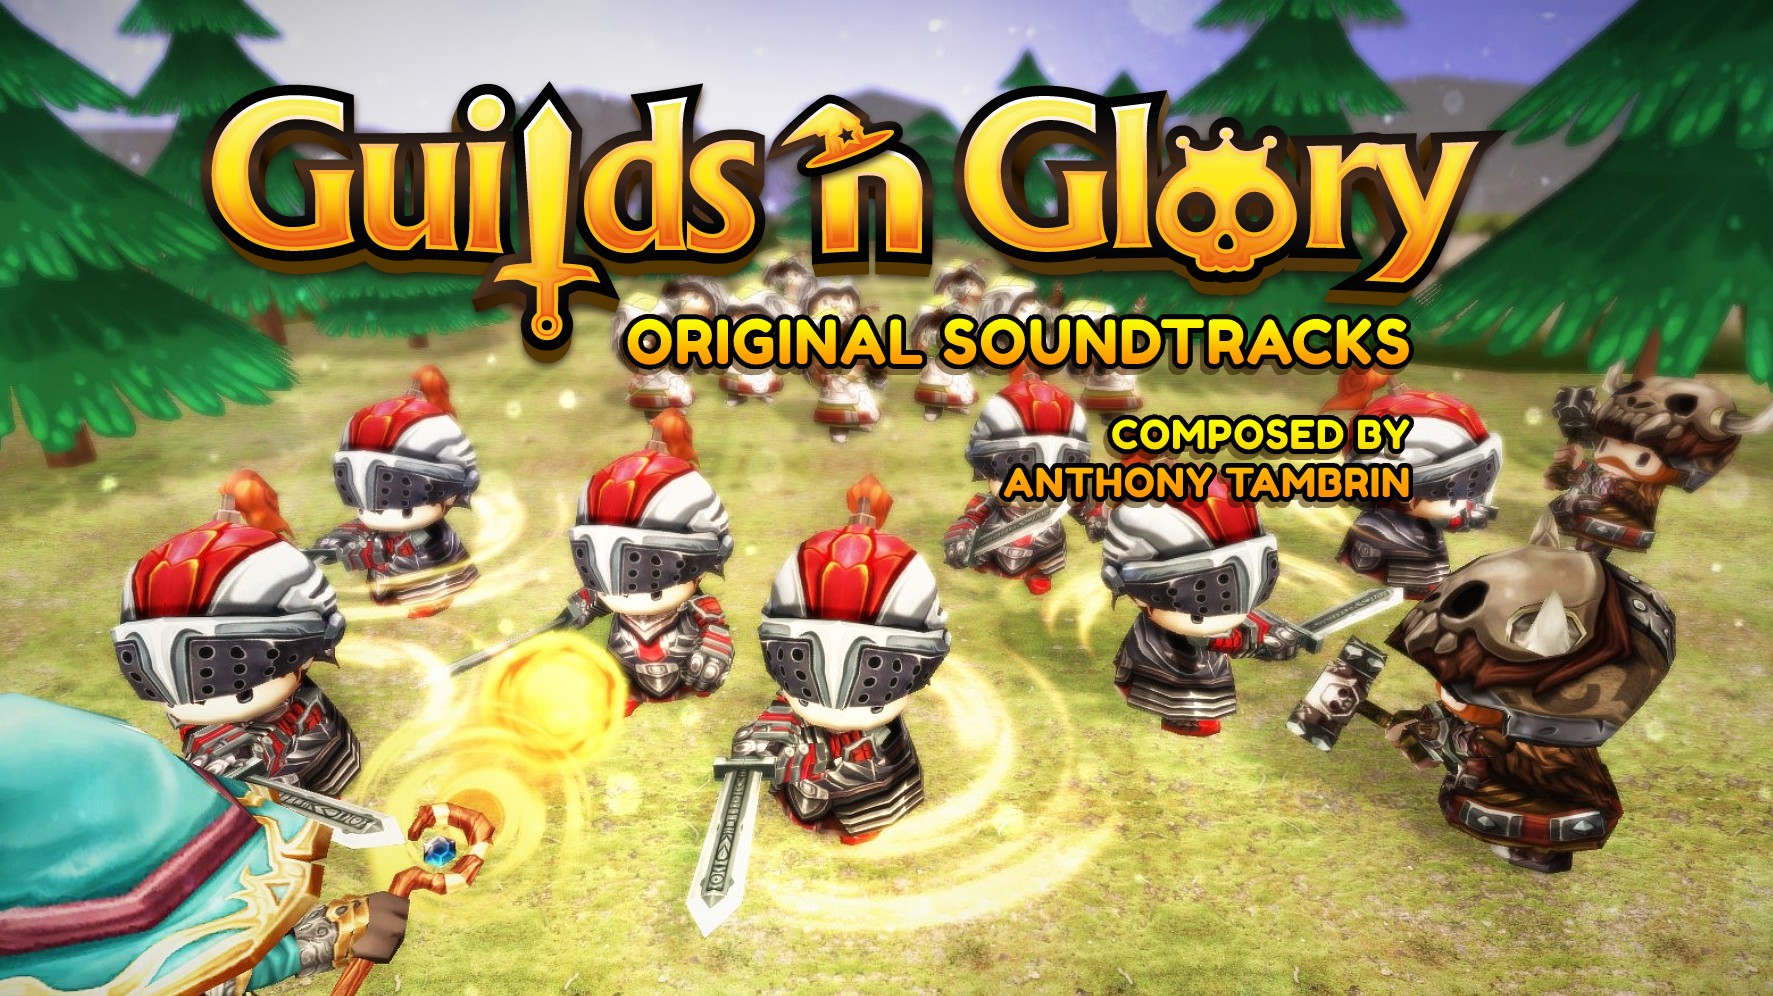 Guilds n Glory Original Soundtracks